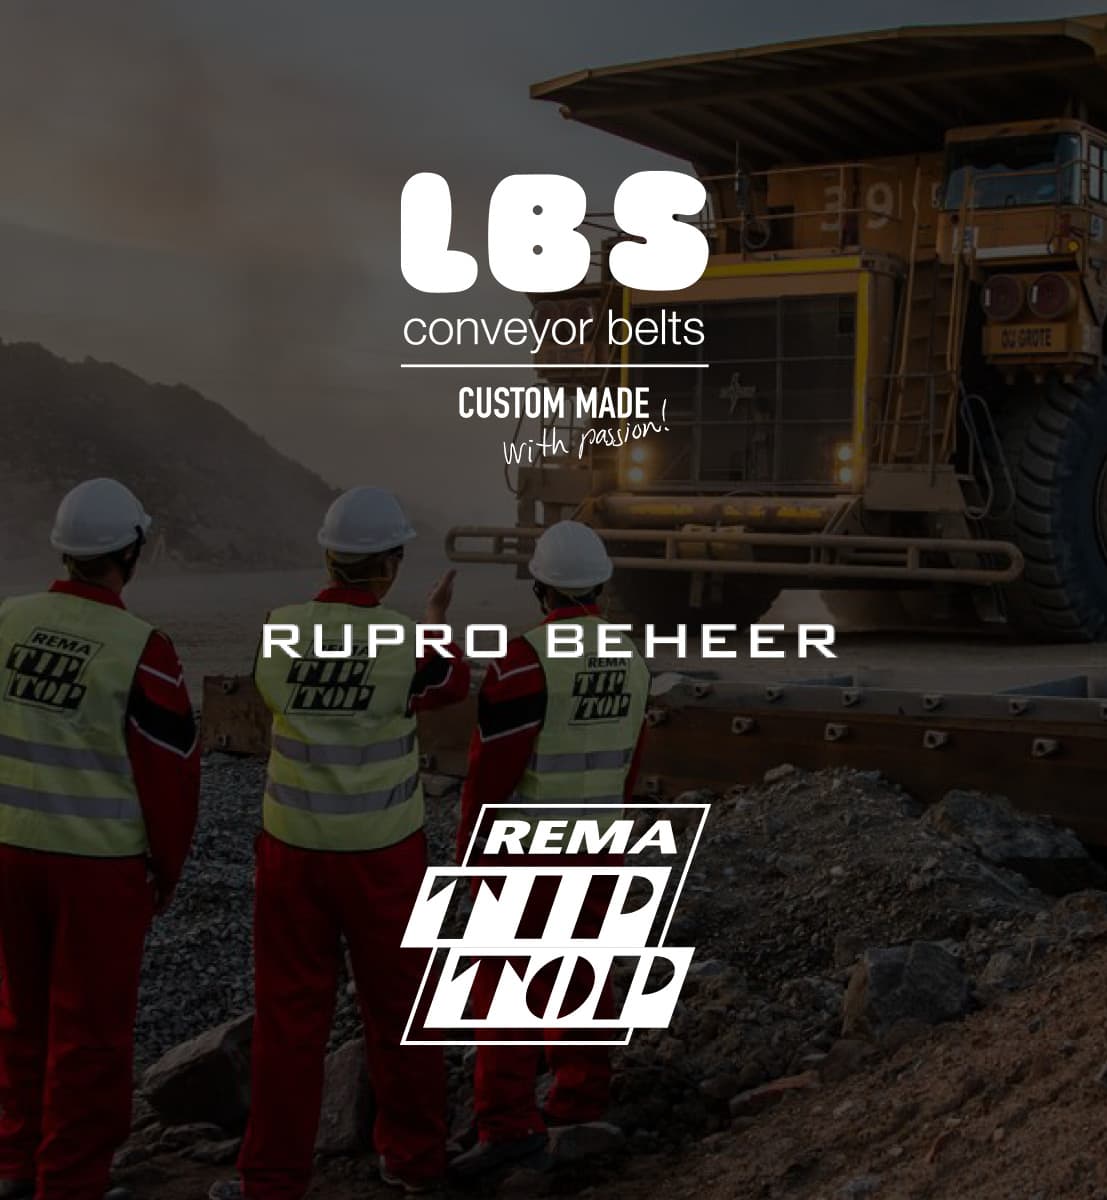 DEX international M&A advised LBS Beheer on the sale to Rupro Beheer (Rema Tip Top)